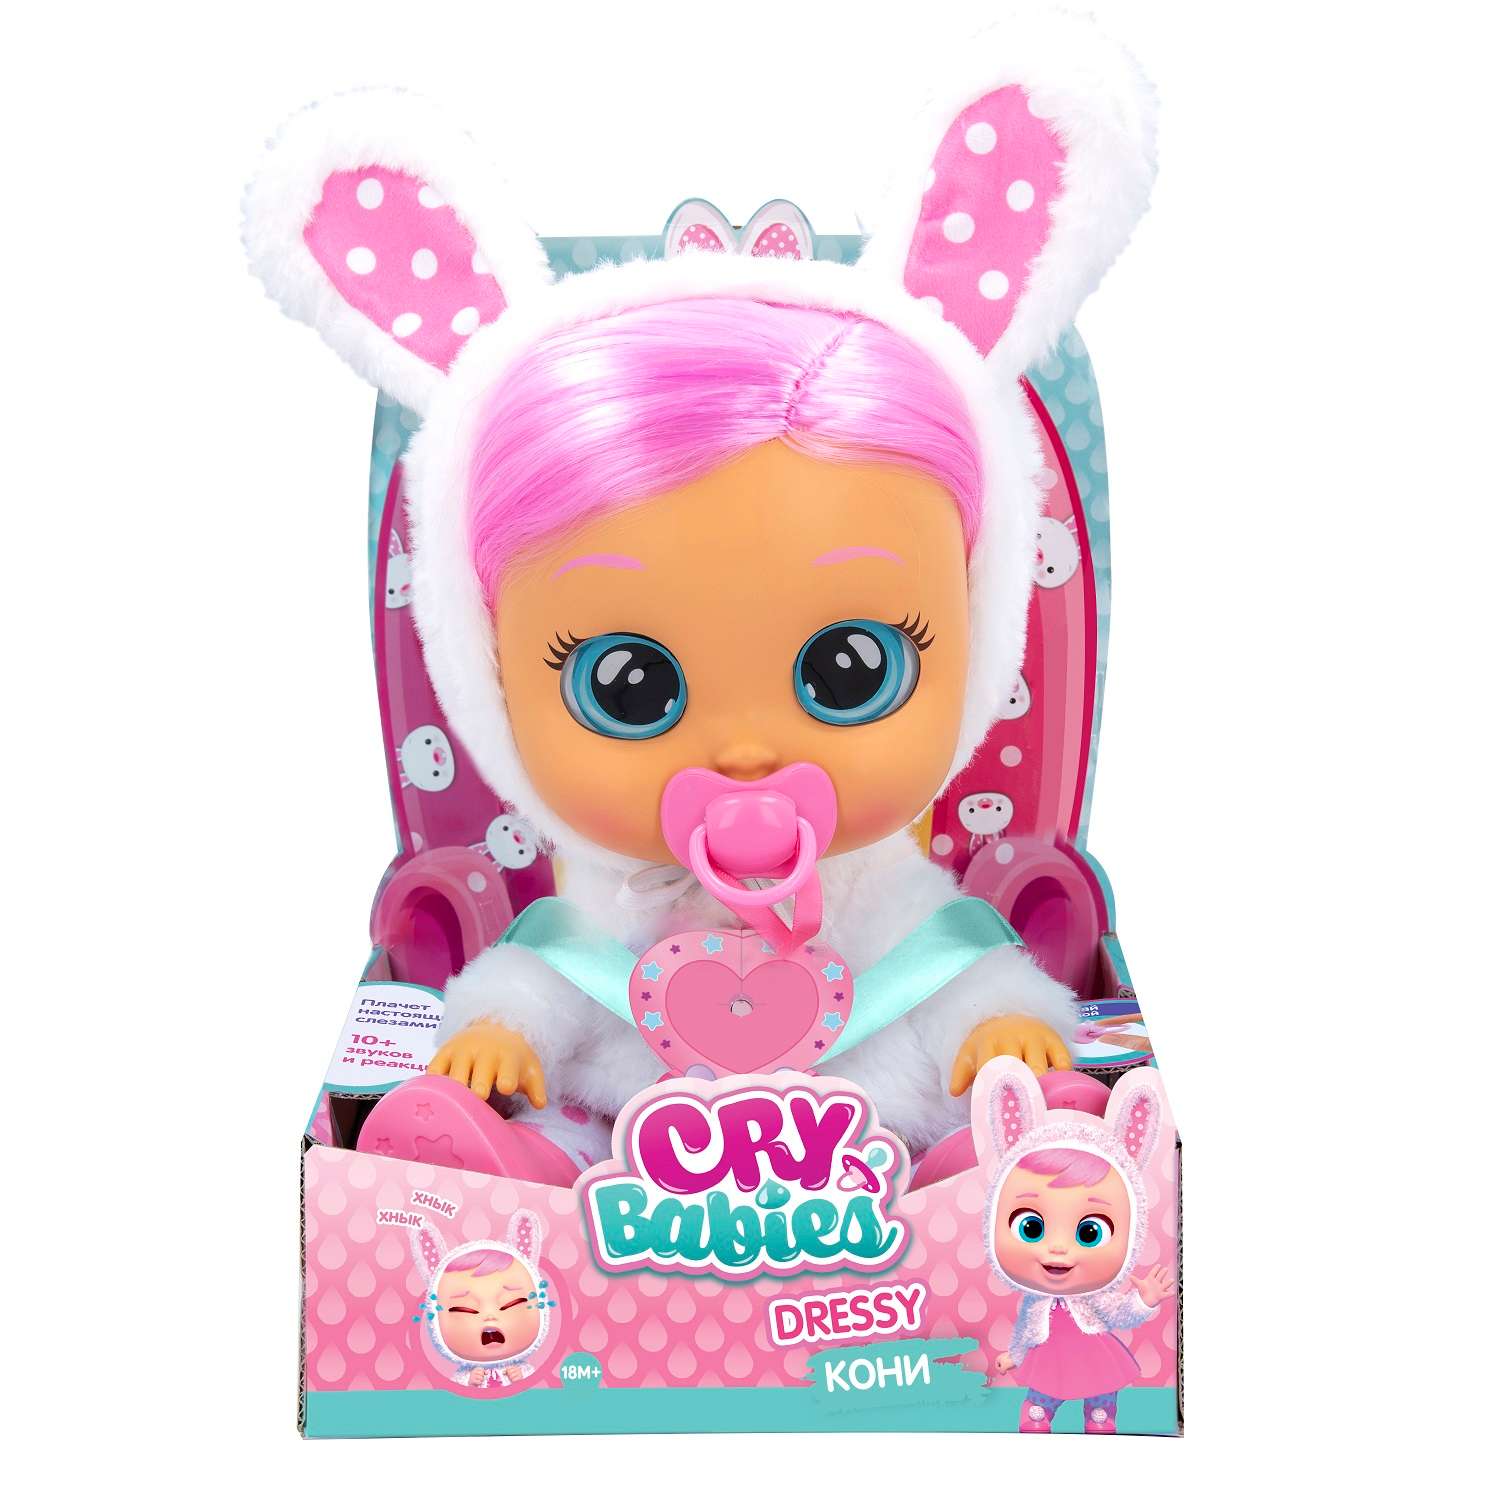 Кукла Cry Babies Dressy Кони интерактивная 40883 40883 - фото 2